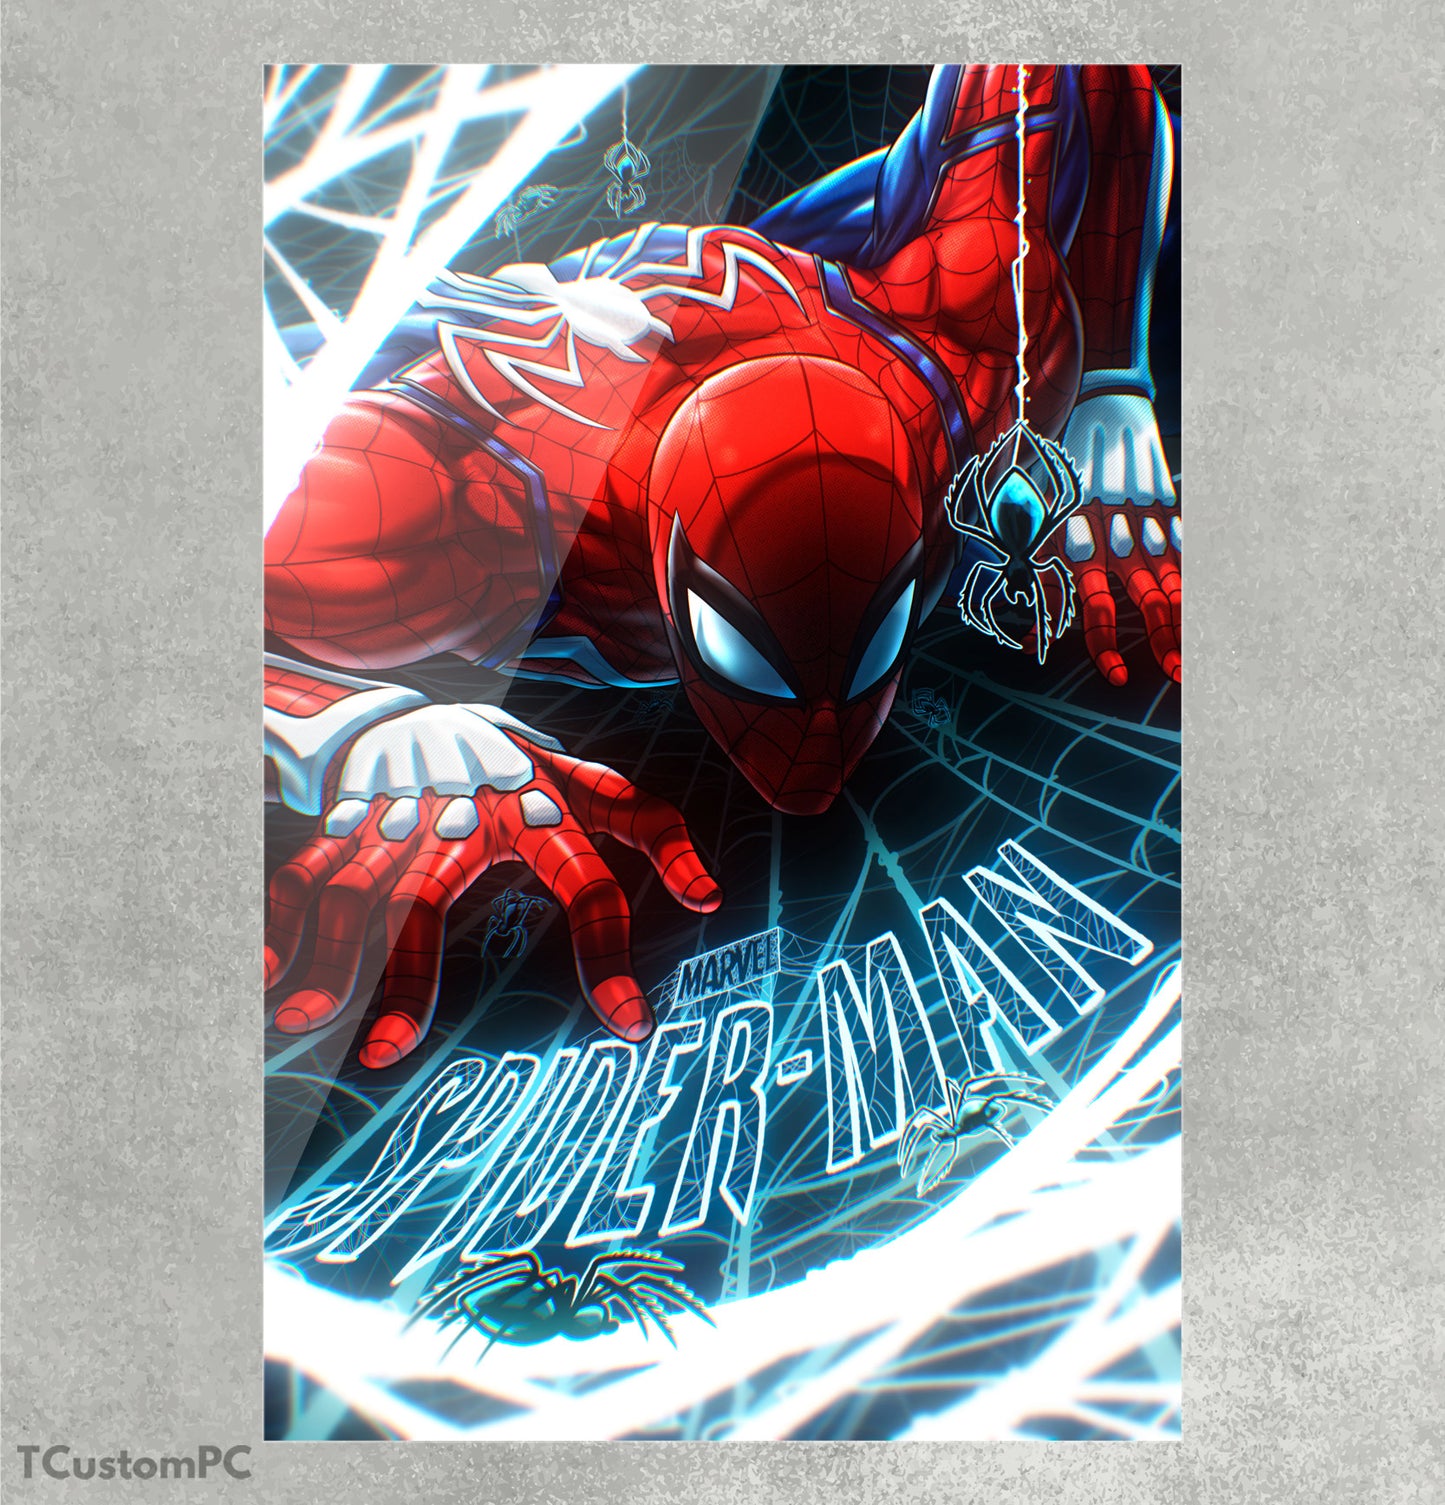 Spider-Man PS4 box